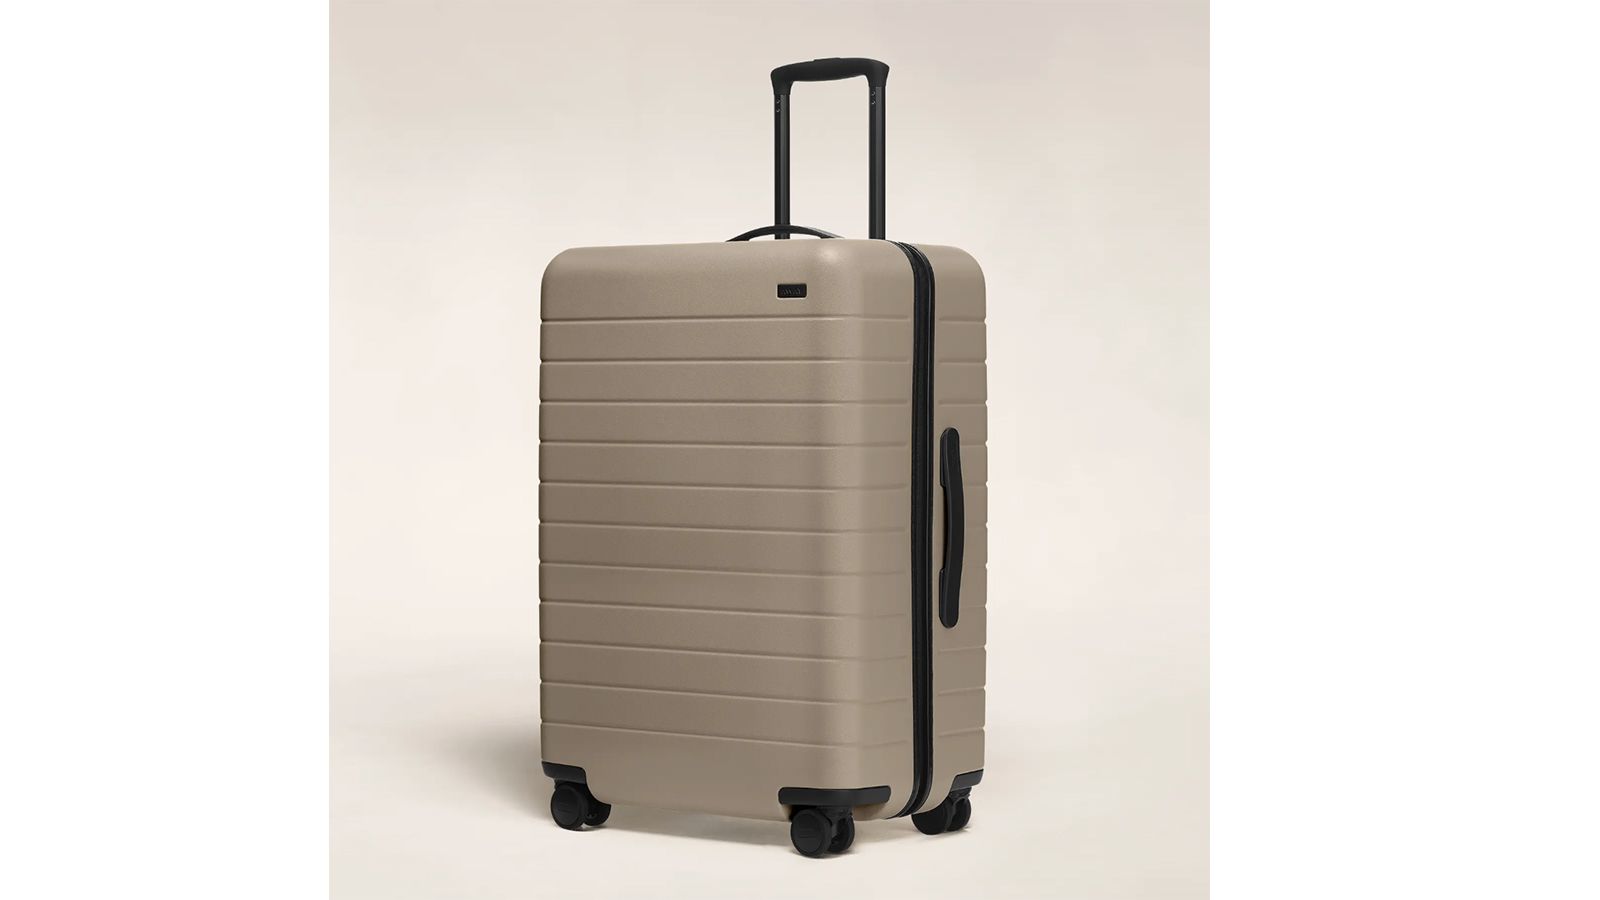 Meteor Sky Underseat Travel Luggage with Spinners [KVL8899] – Brangio Italy  Handbag Wholesale Company